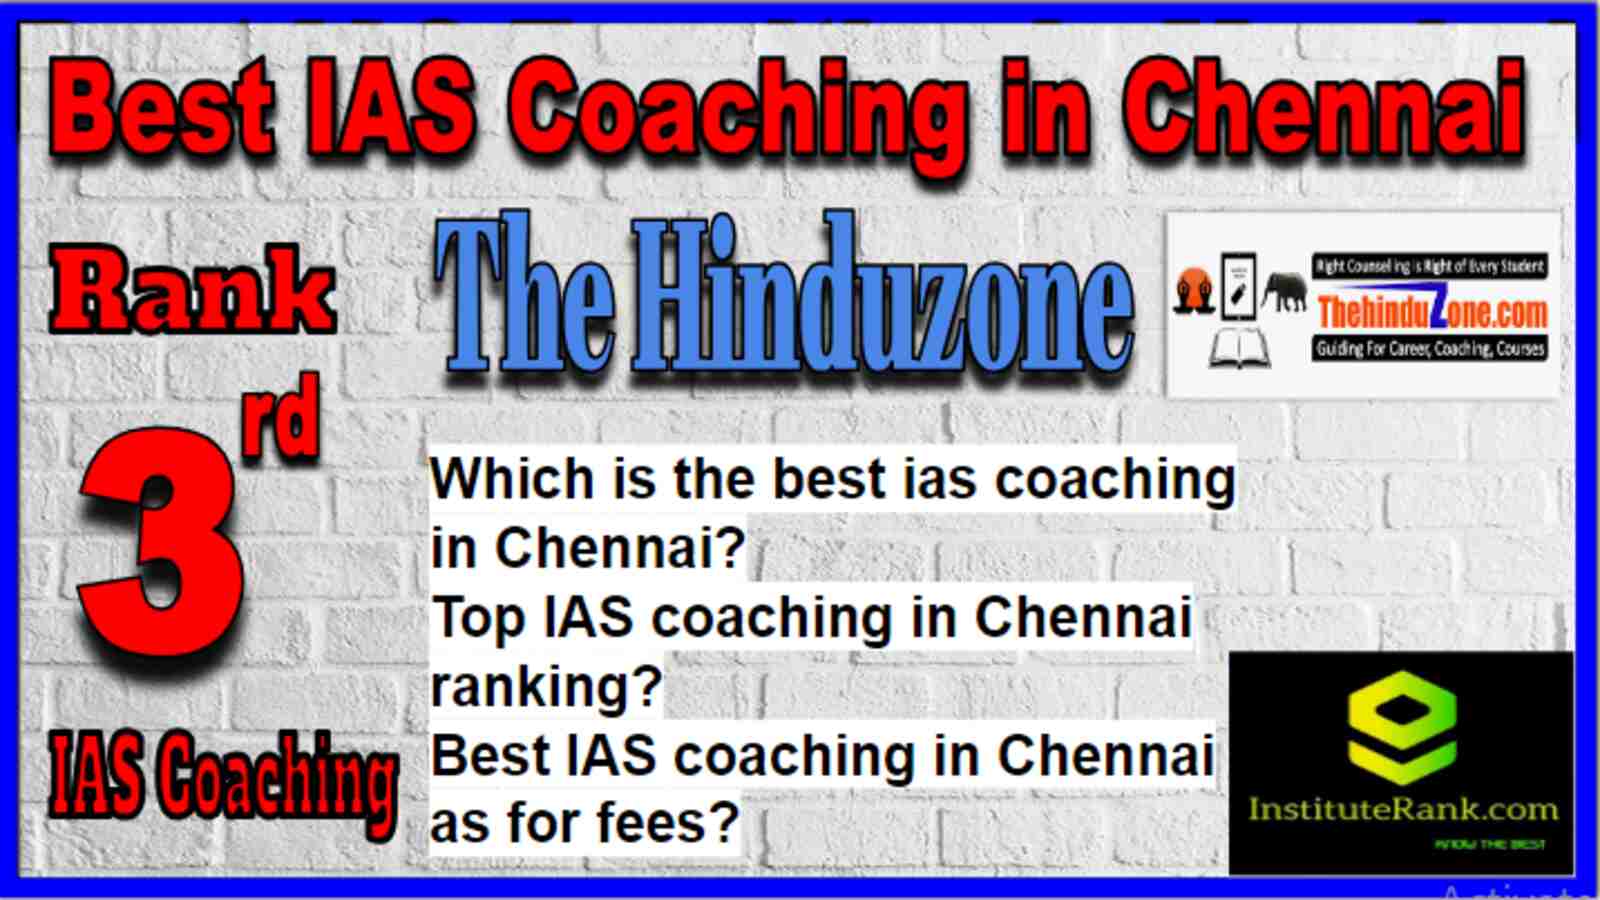 Rank 3 Best IAS Coaching in Chennai